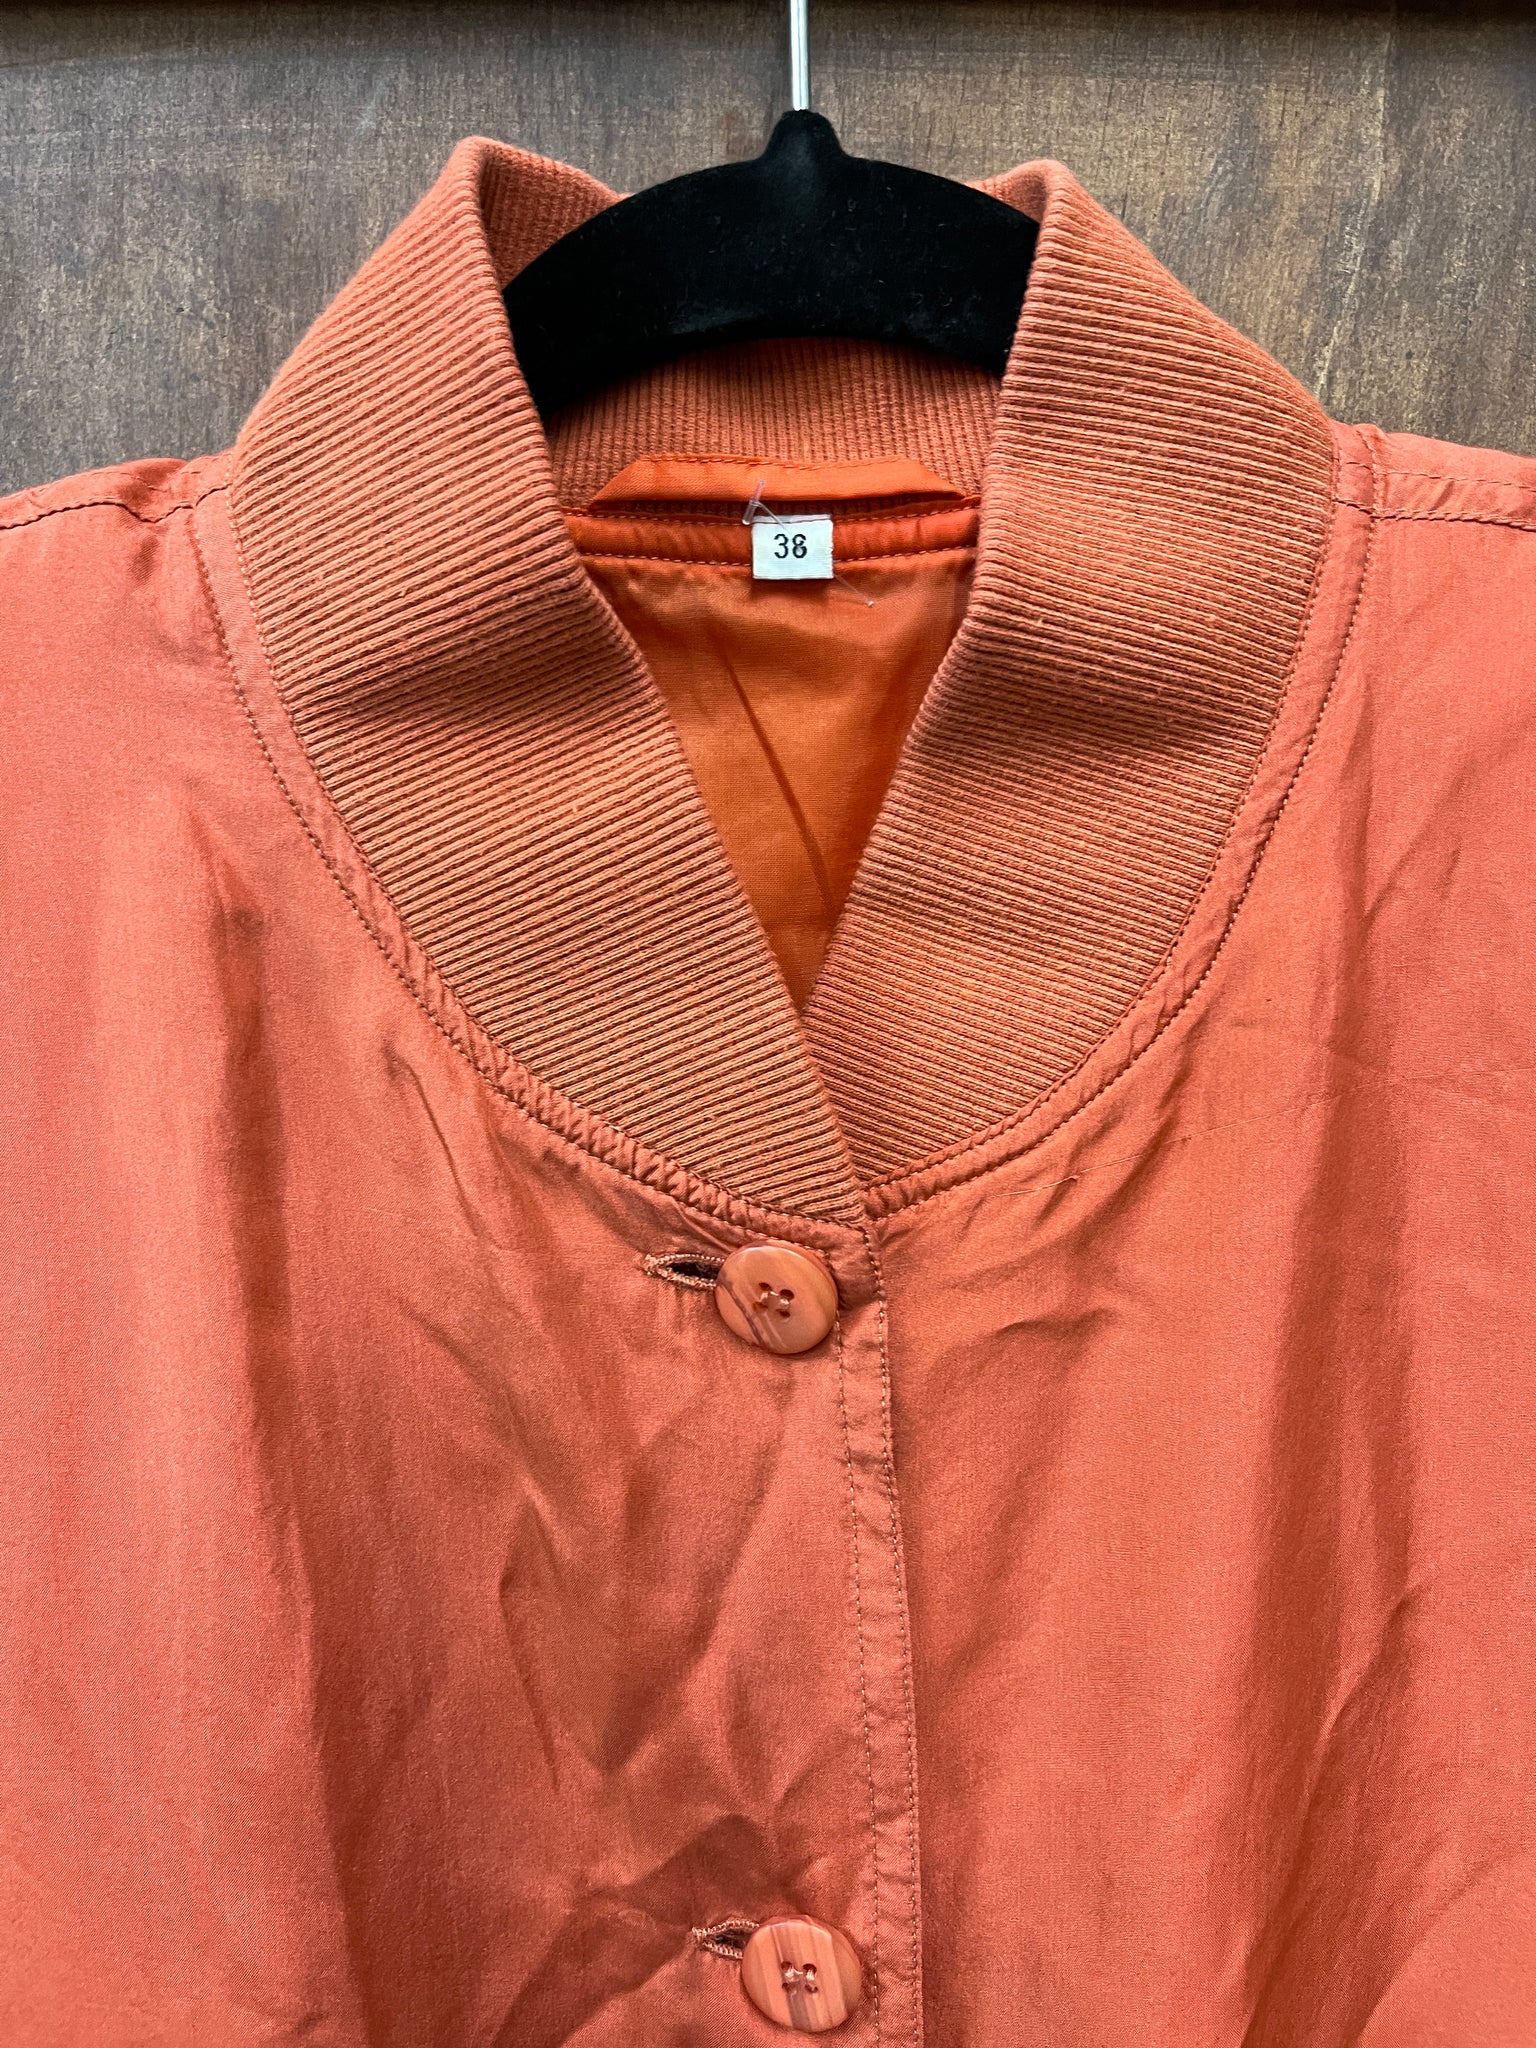 1990s JACKET- Rusty orange silk baseball jacket